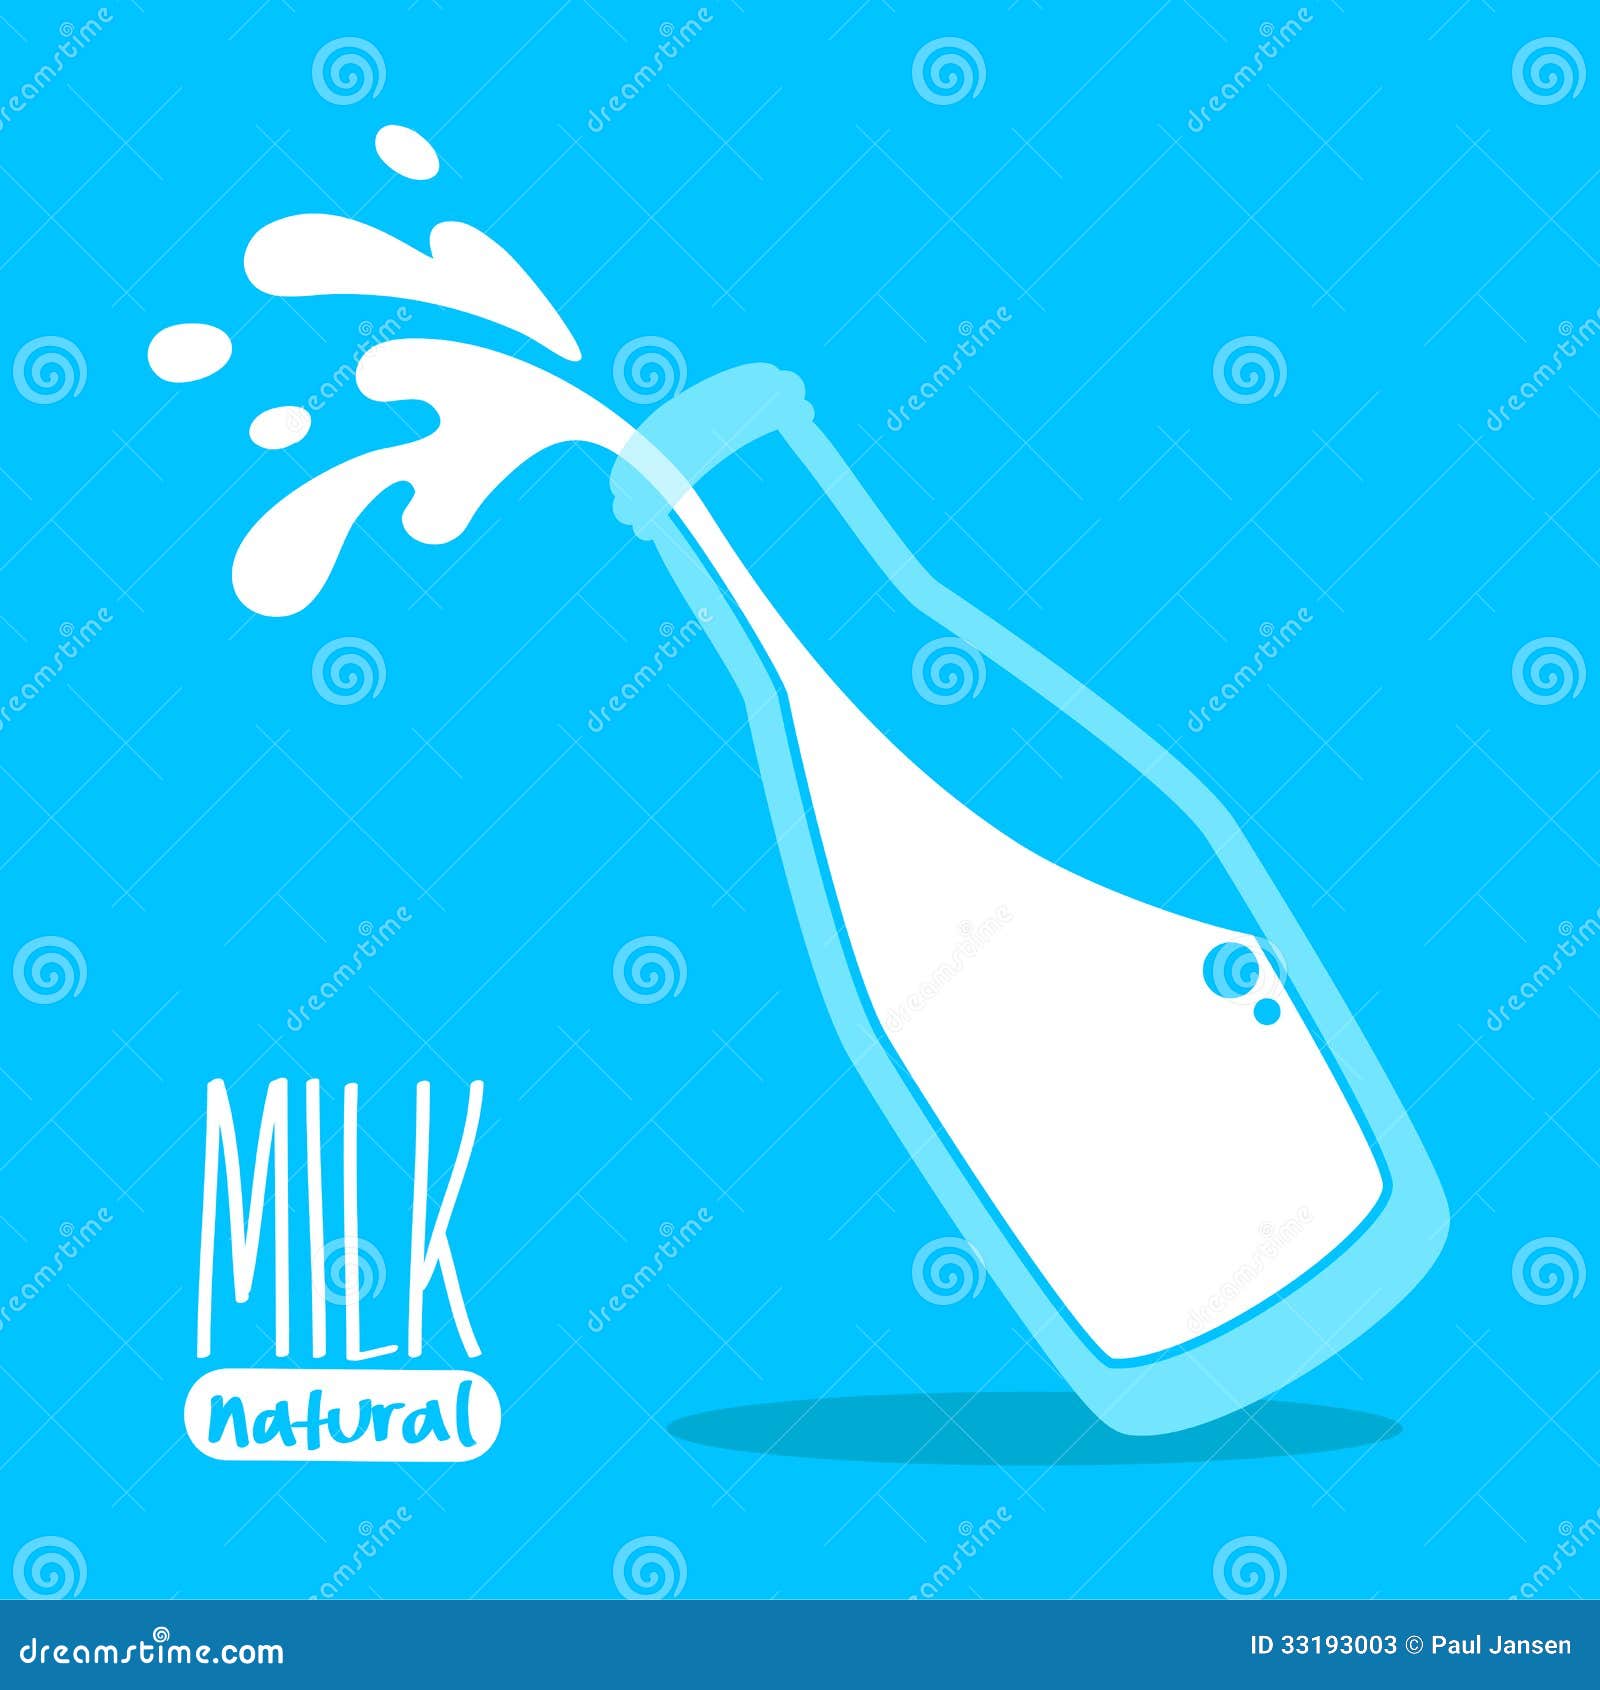 https://thumbs.dreamstime.com/z/pouring-milk-glass-bottle-blue-background-vector-illustration-33193003.jpg